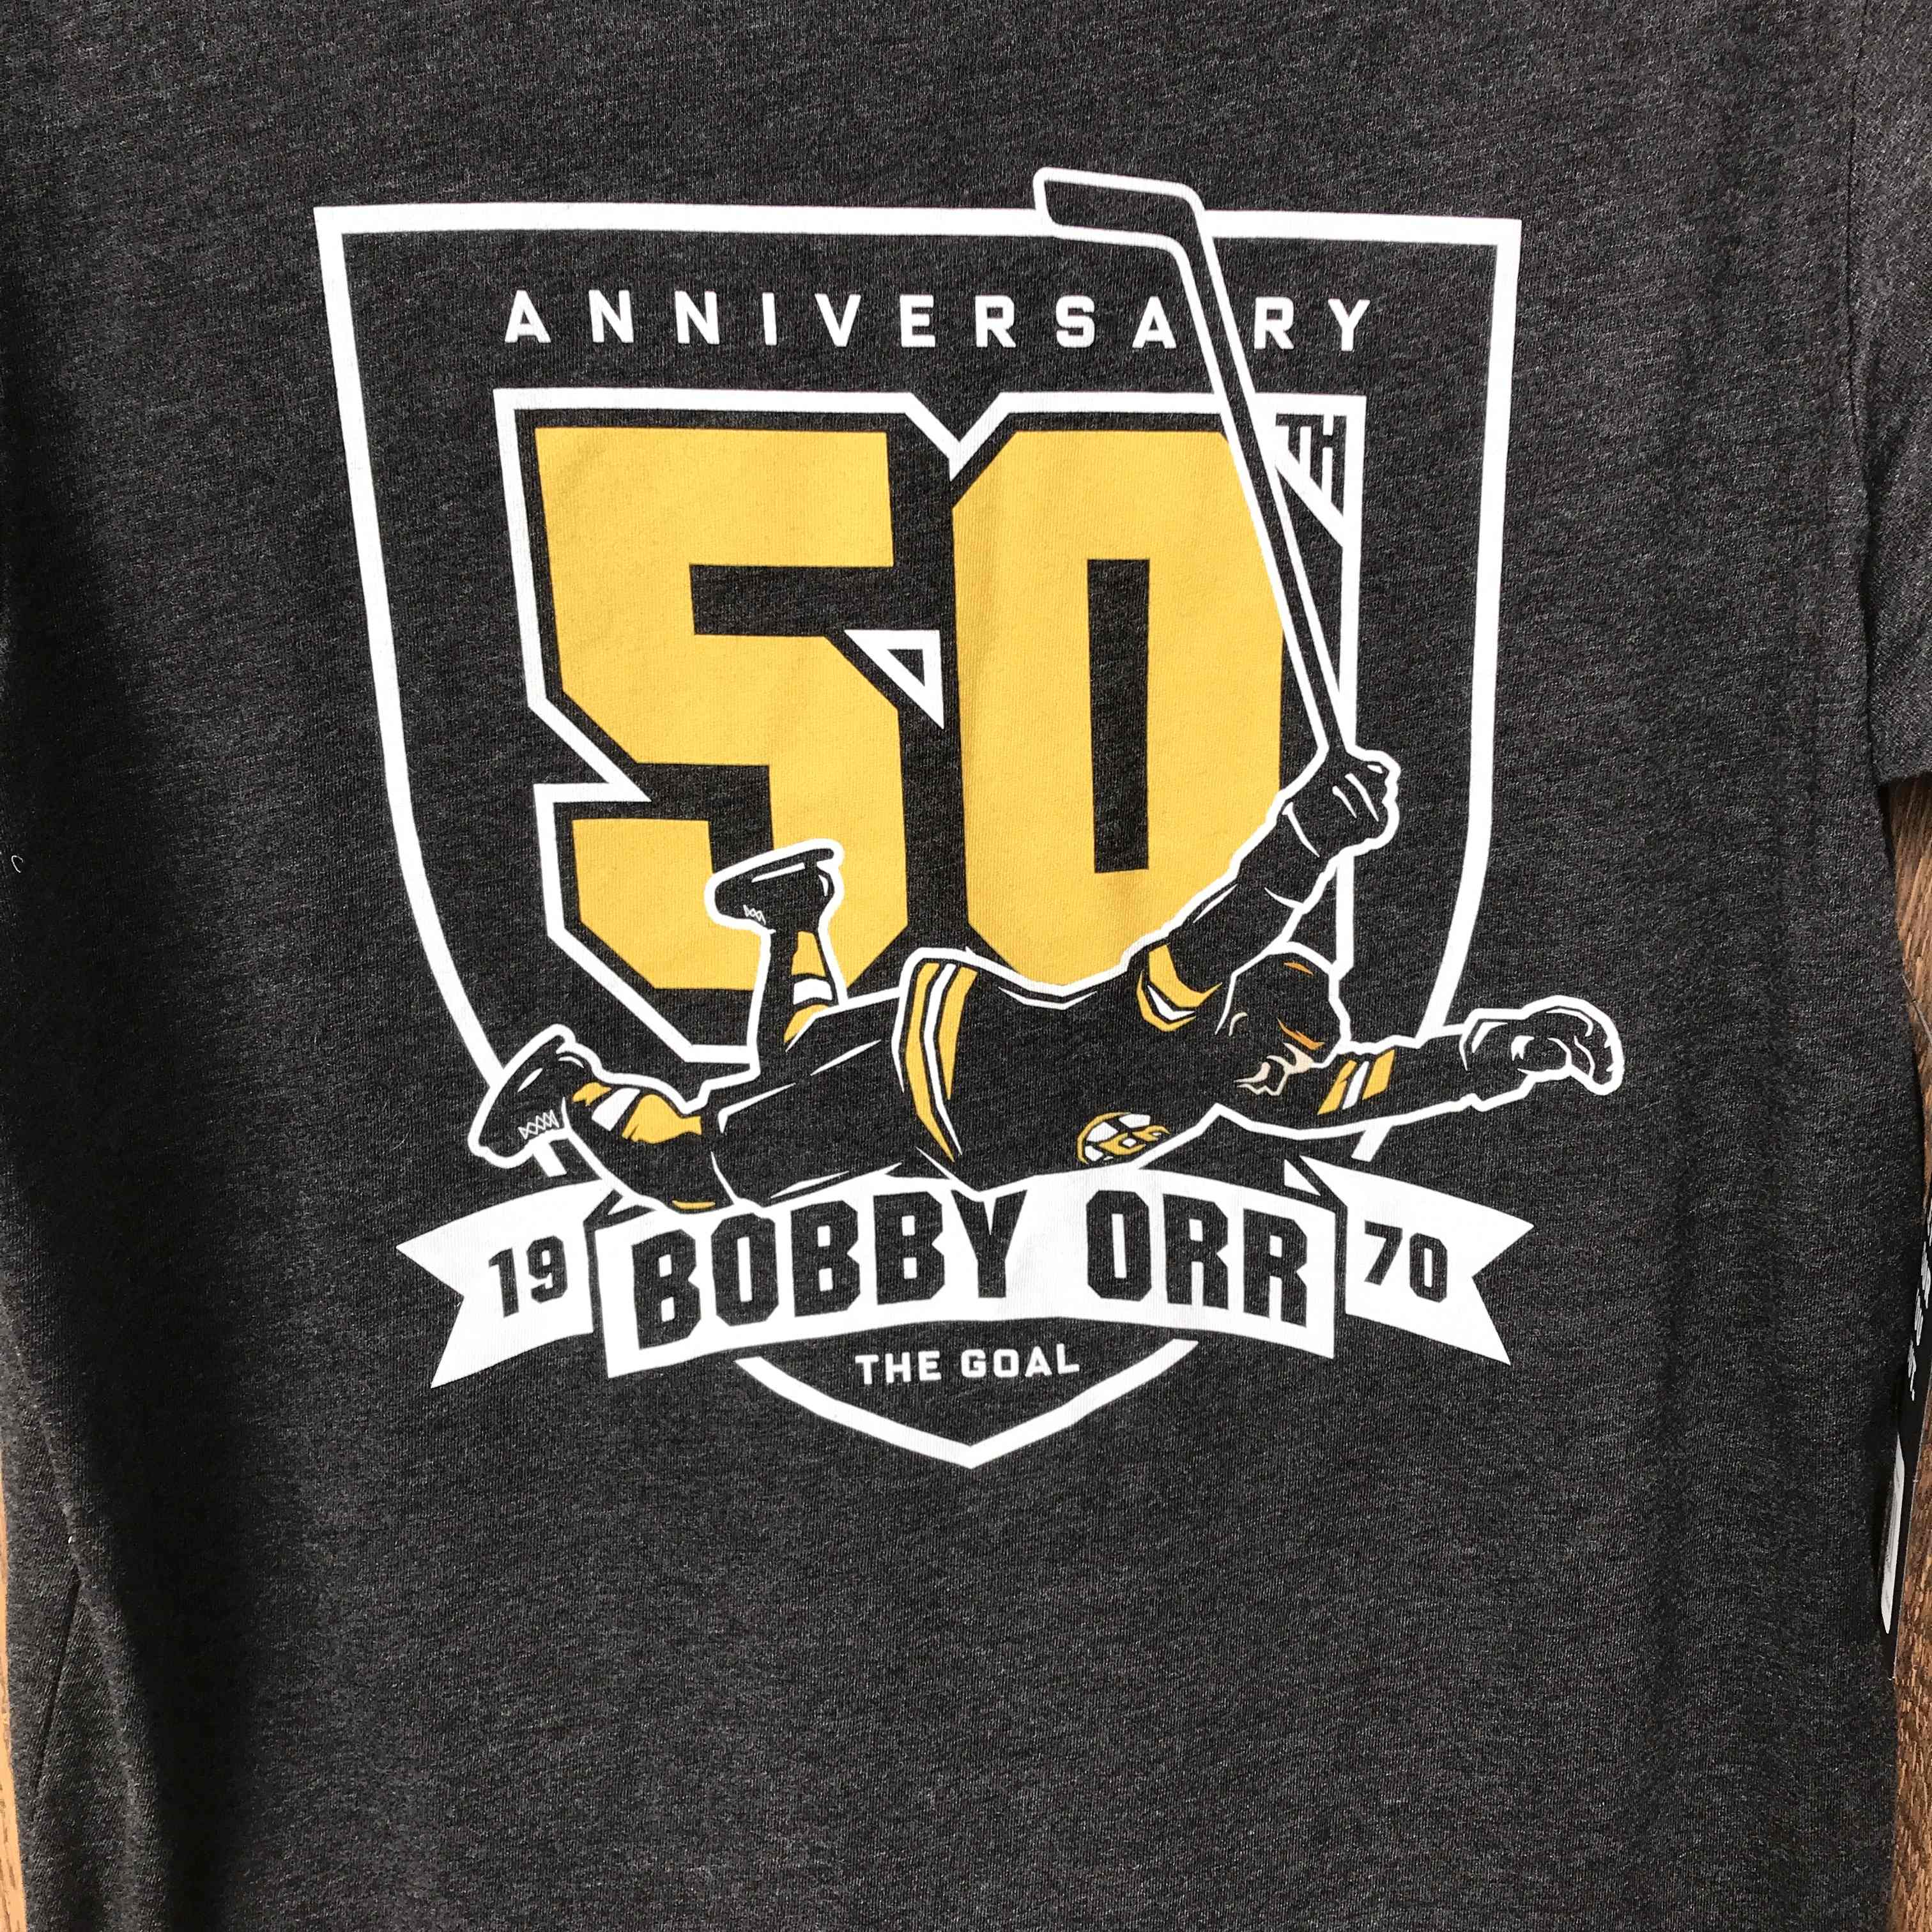 bobby orr 50th anniversary jersey